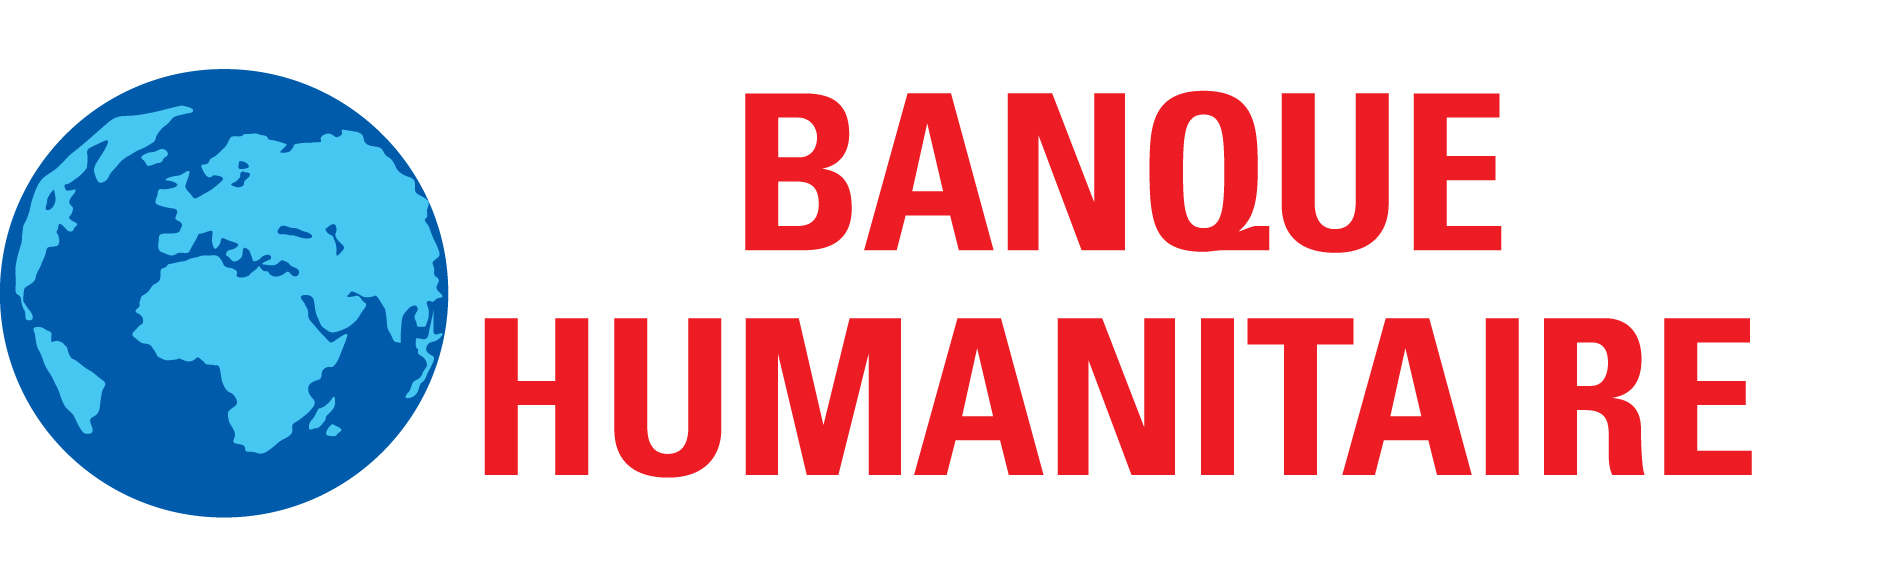 Logo Banque humanitaire.jpg